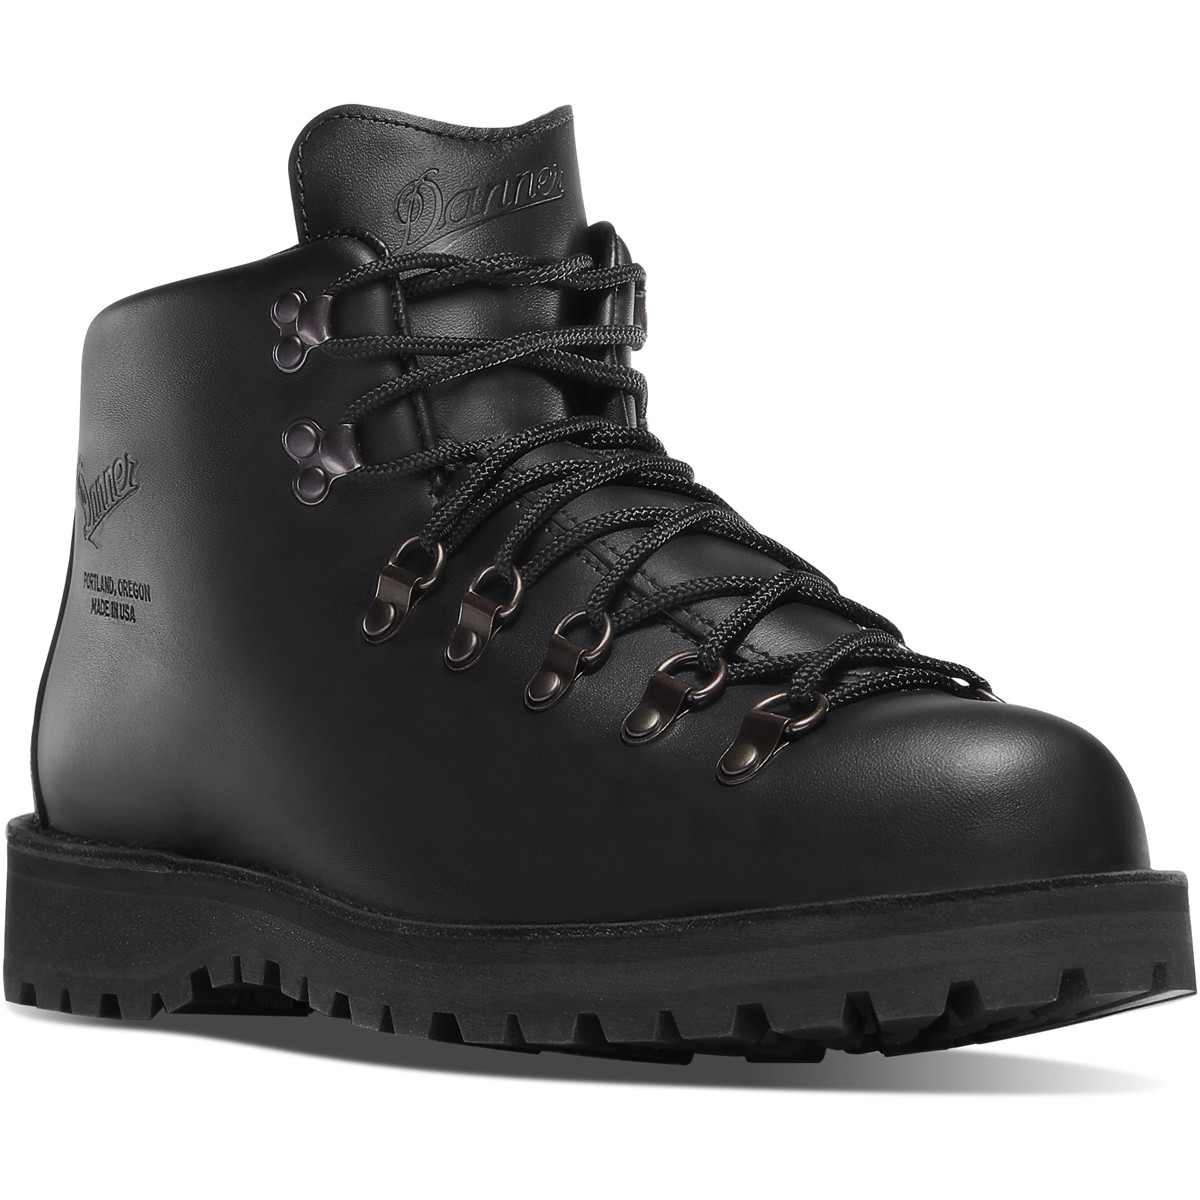 Danner Mens Mountain Light Hiking Boots Black - ONZ853129